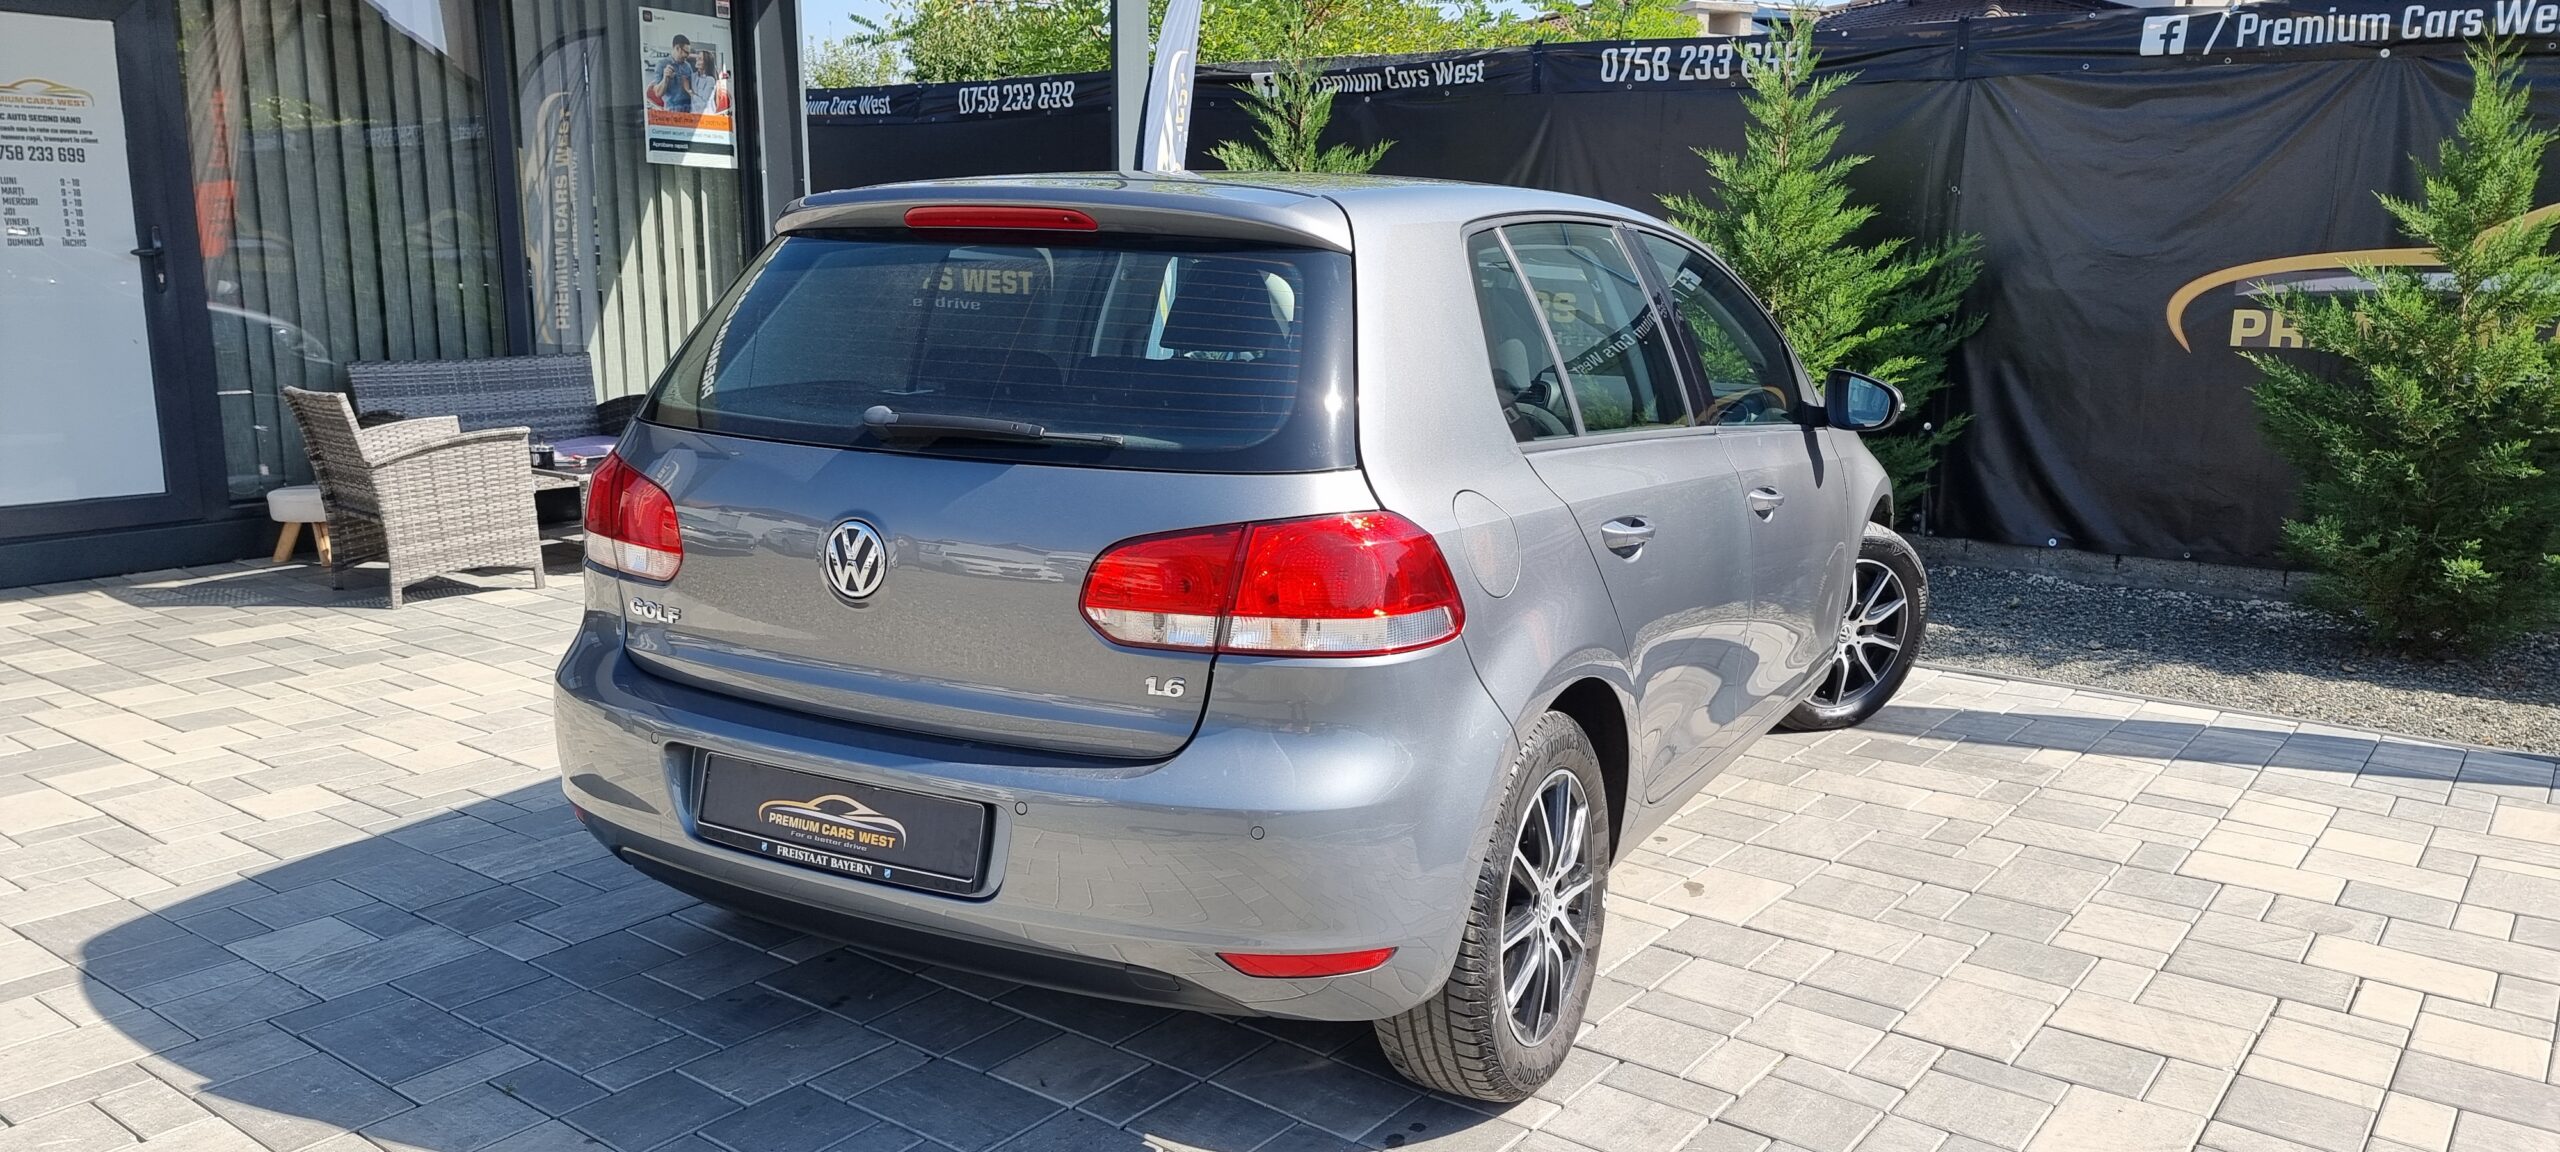 VW GOLF 6, 1.6 BENZINA, 102 CP, EURO 5, AN 2009